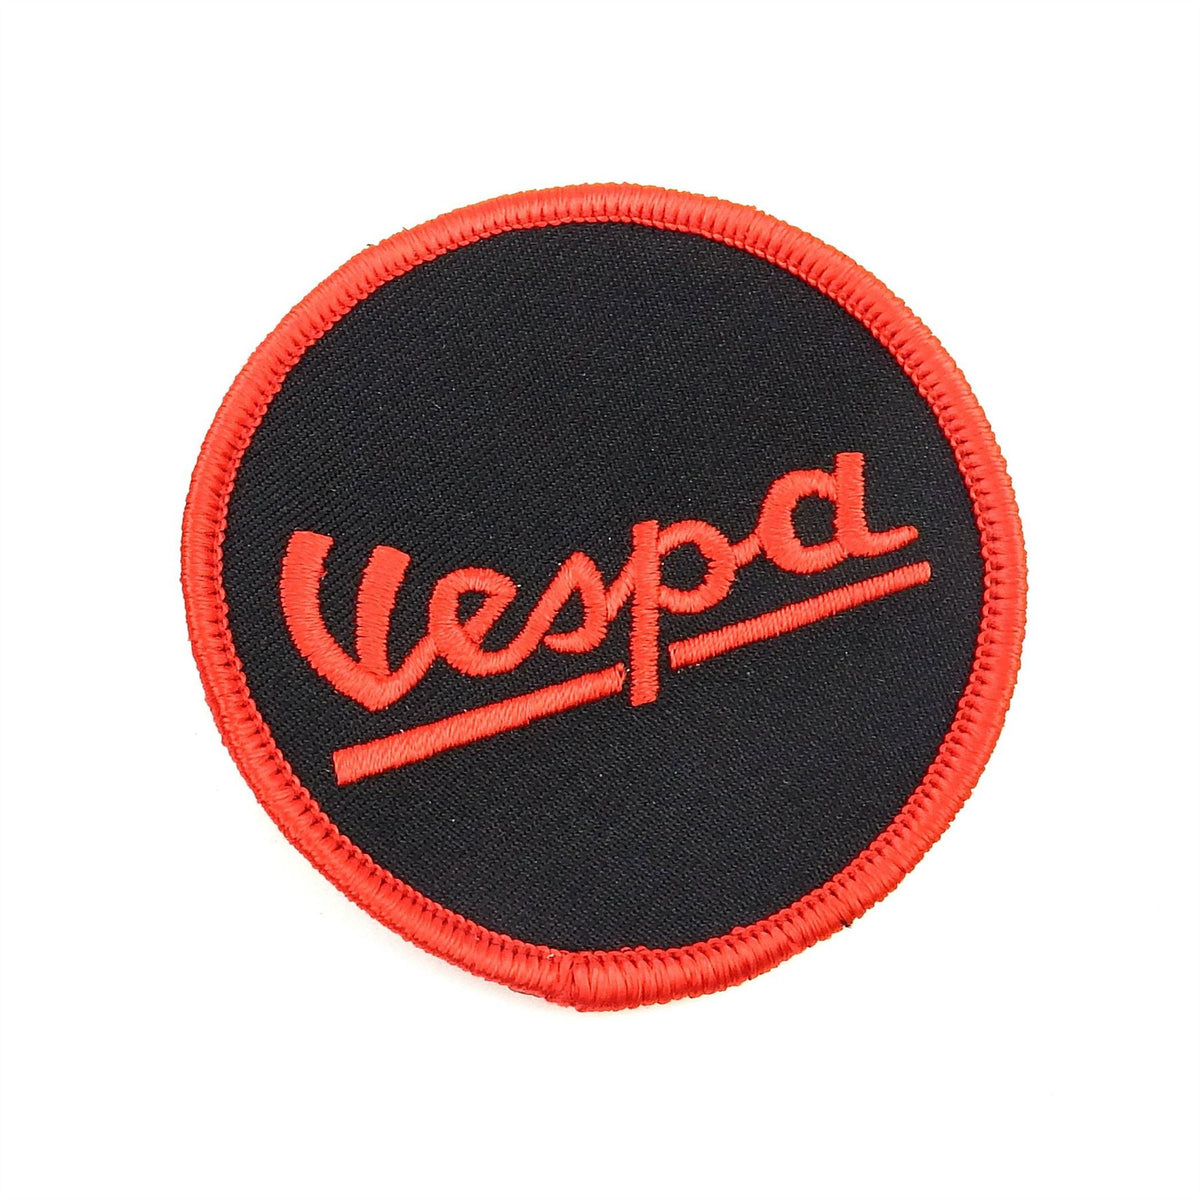 Vespa Round Patch Sew On - Black & Red 7cm